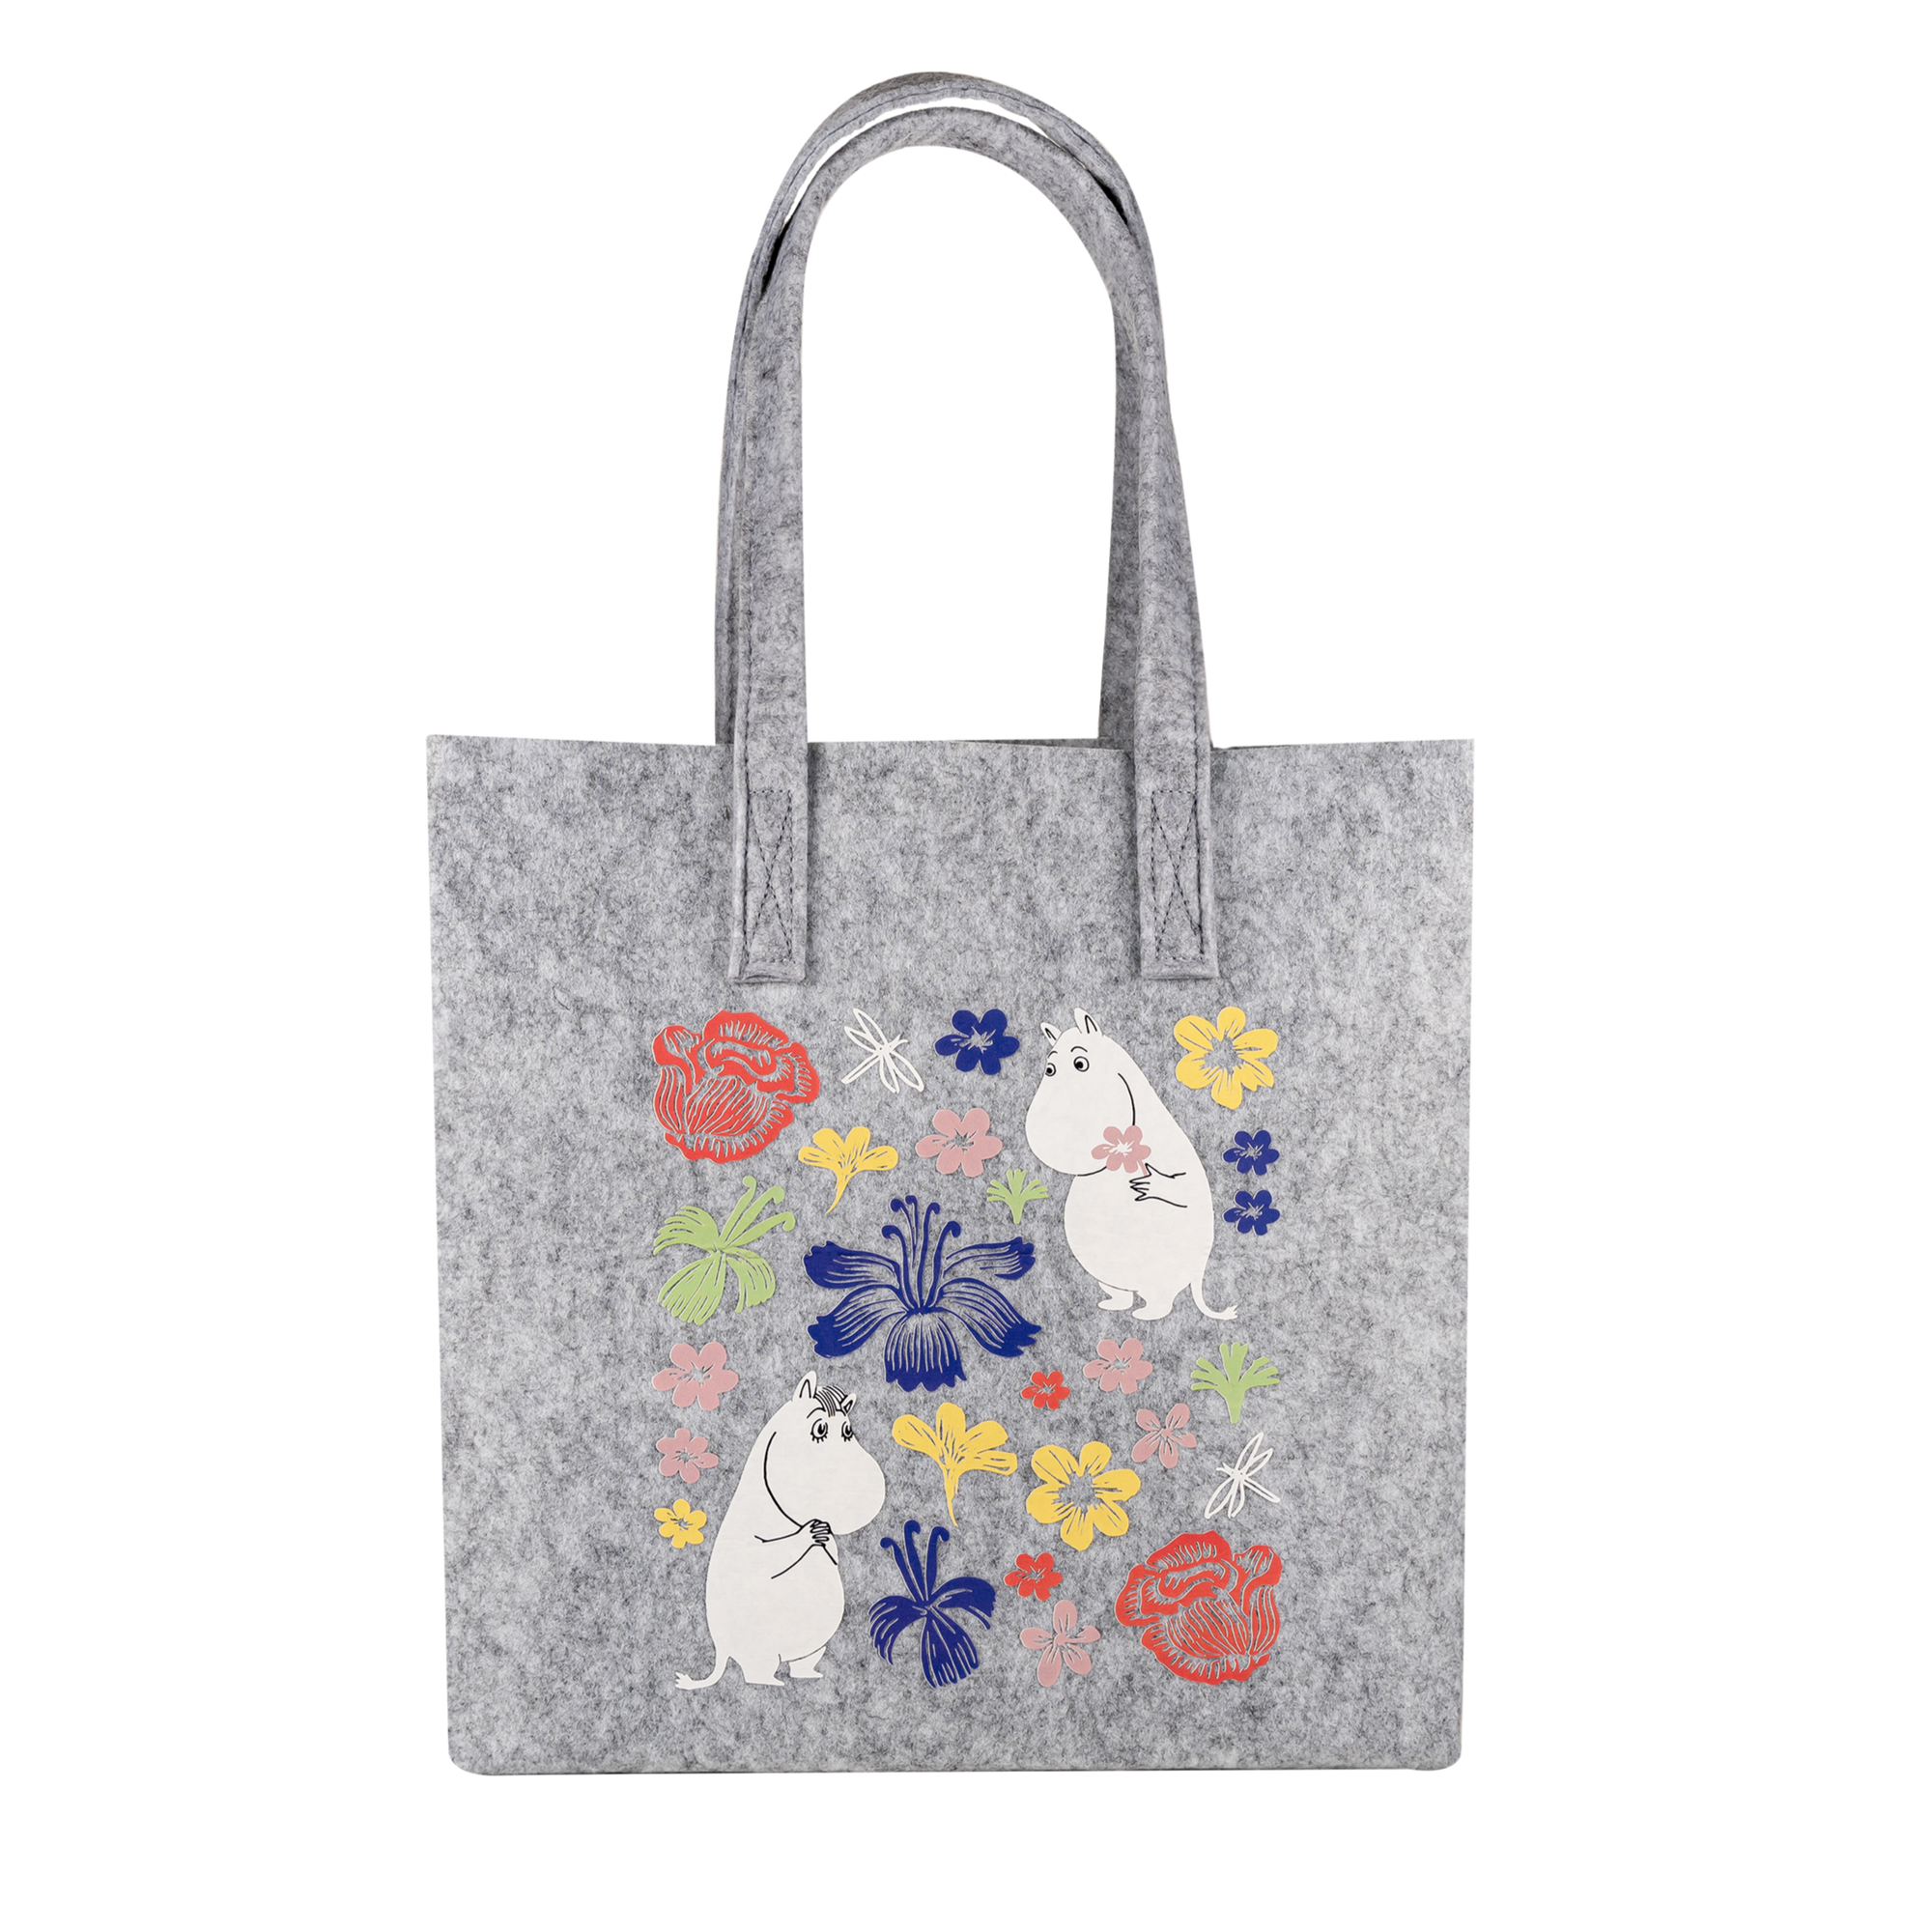 Moomin by Muurla Flowers Tote Bag, Made in Recycled Plastic Bottles. 71-4040-03